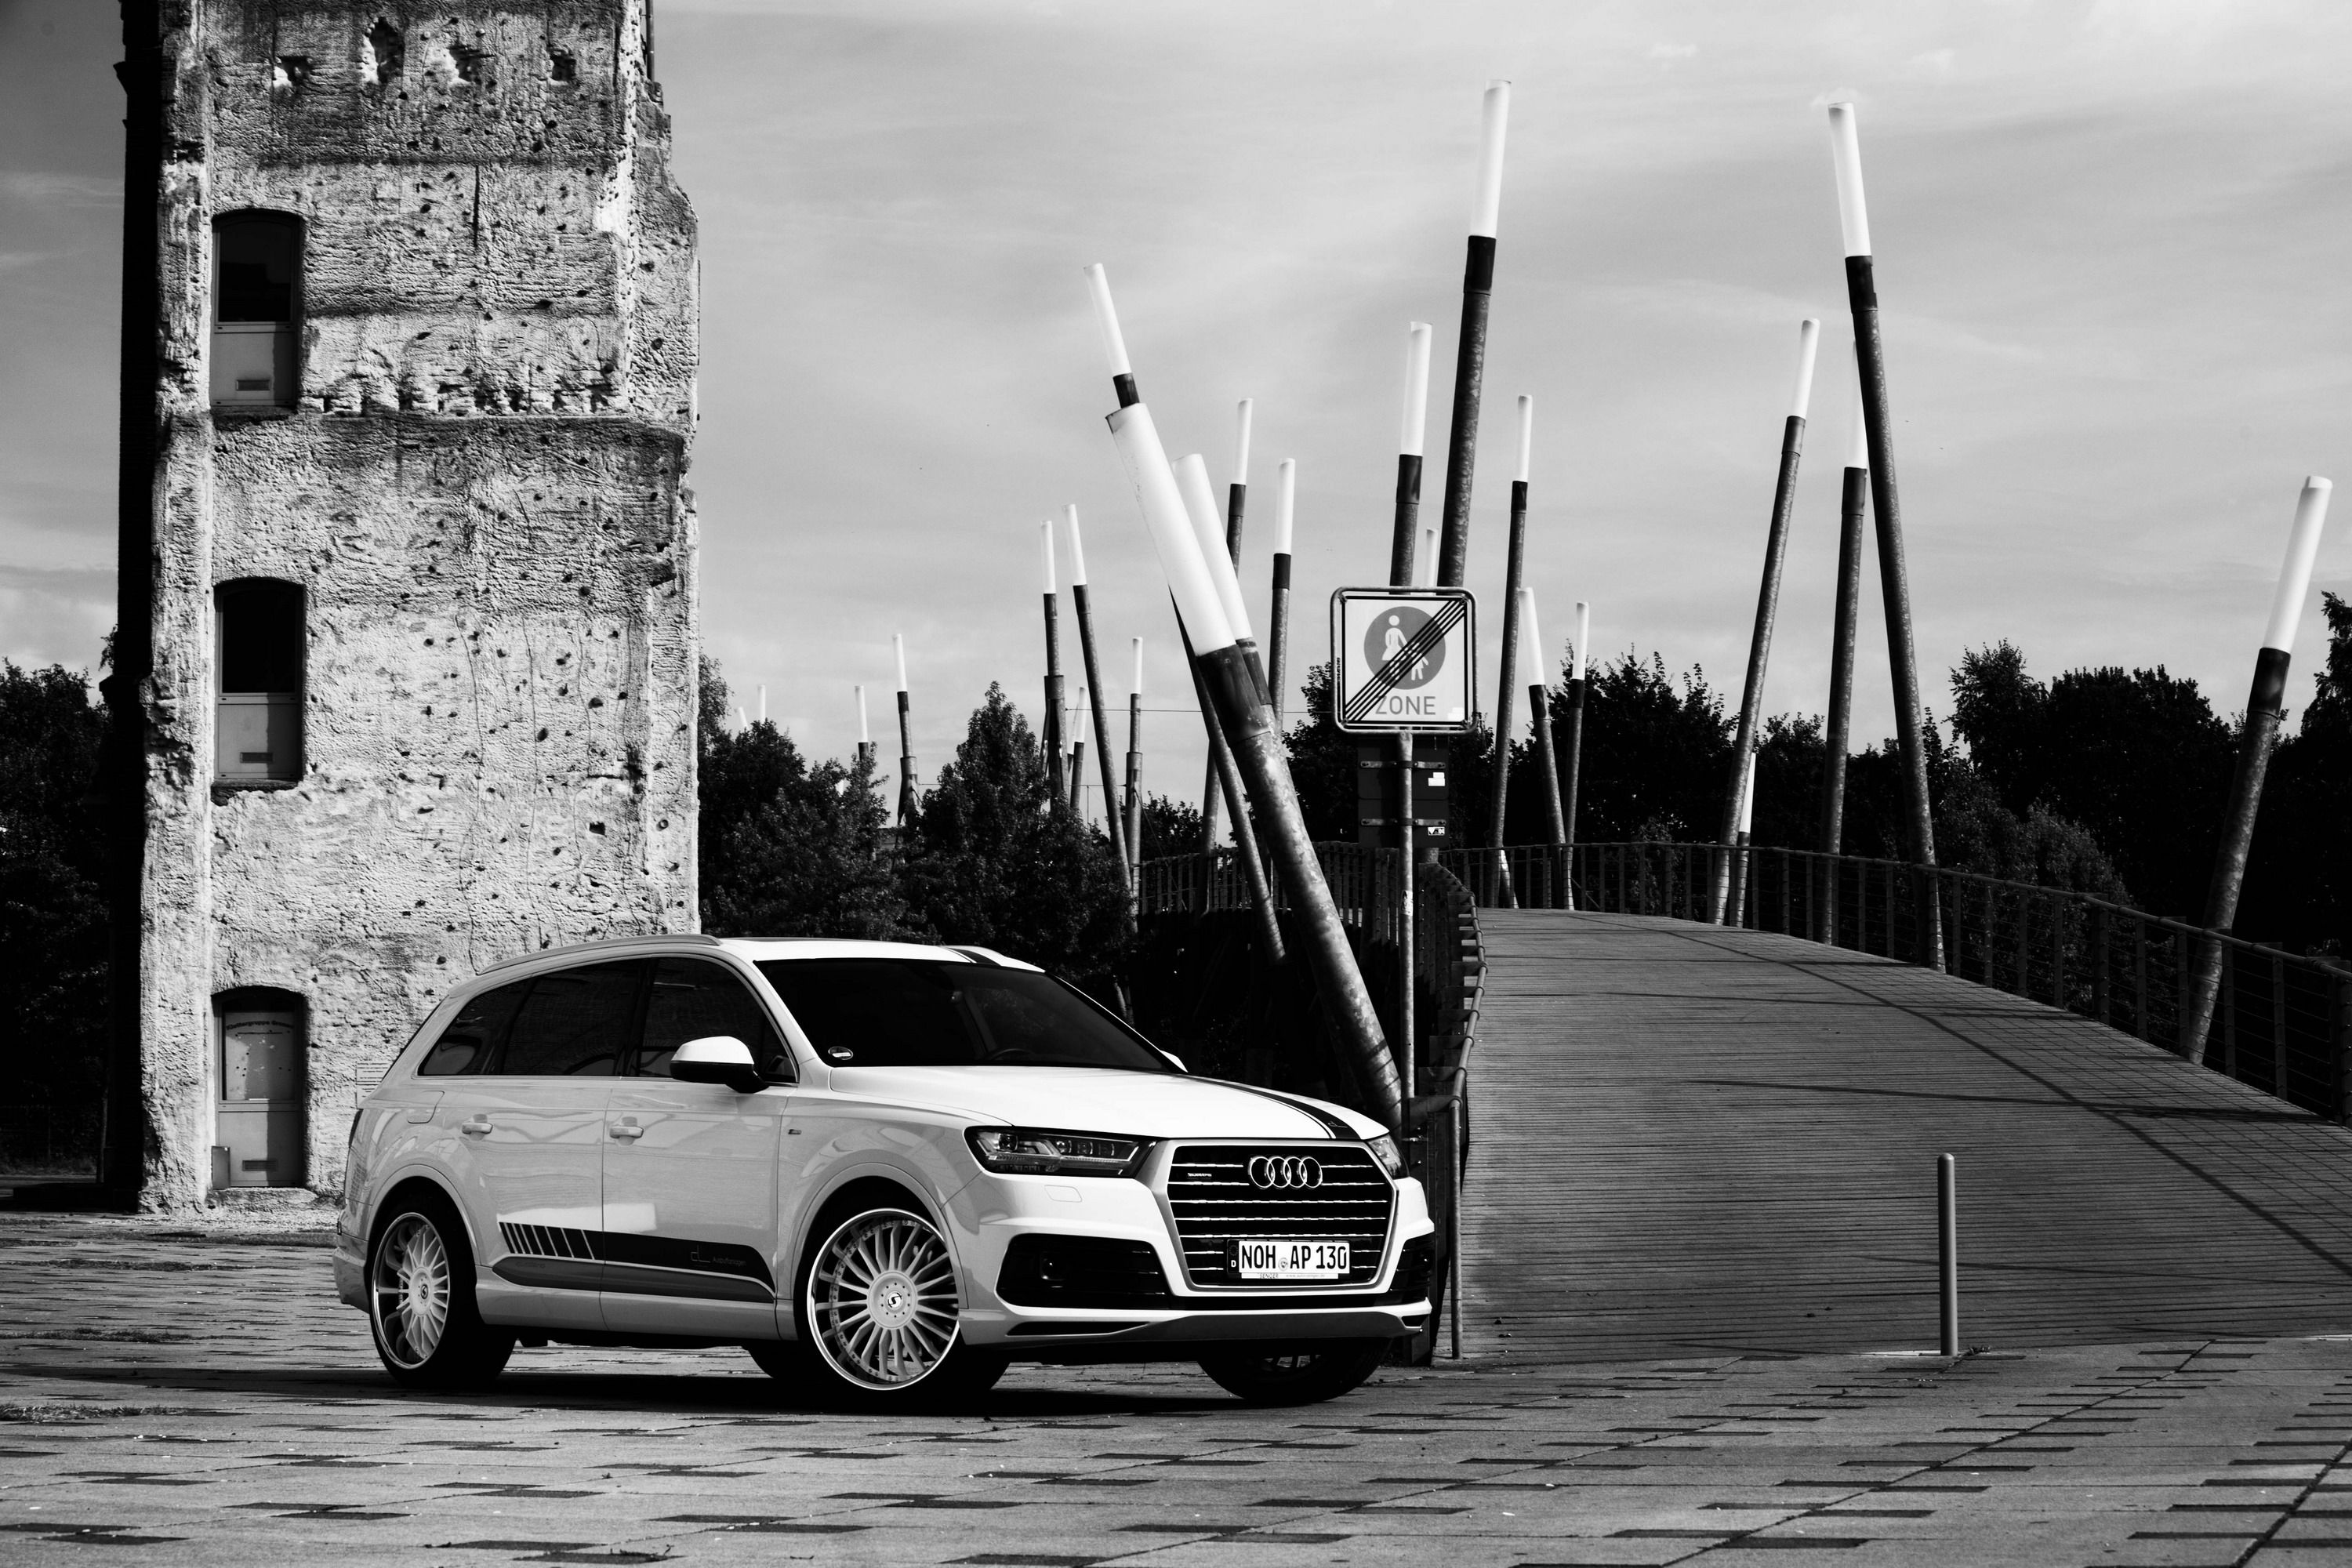 2016 Audi Q7 3.0 TDI by CL by Christian Lübke